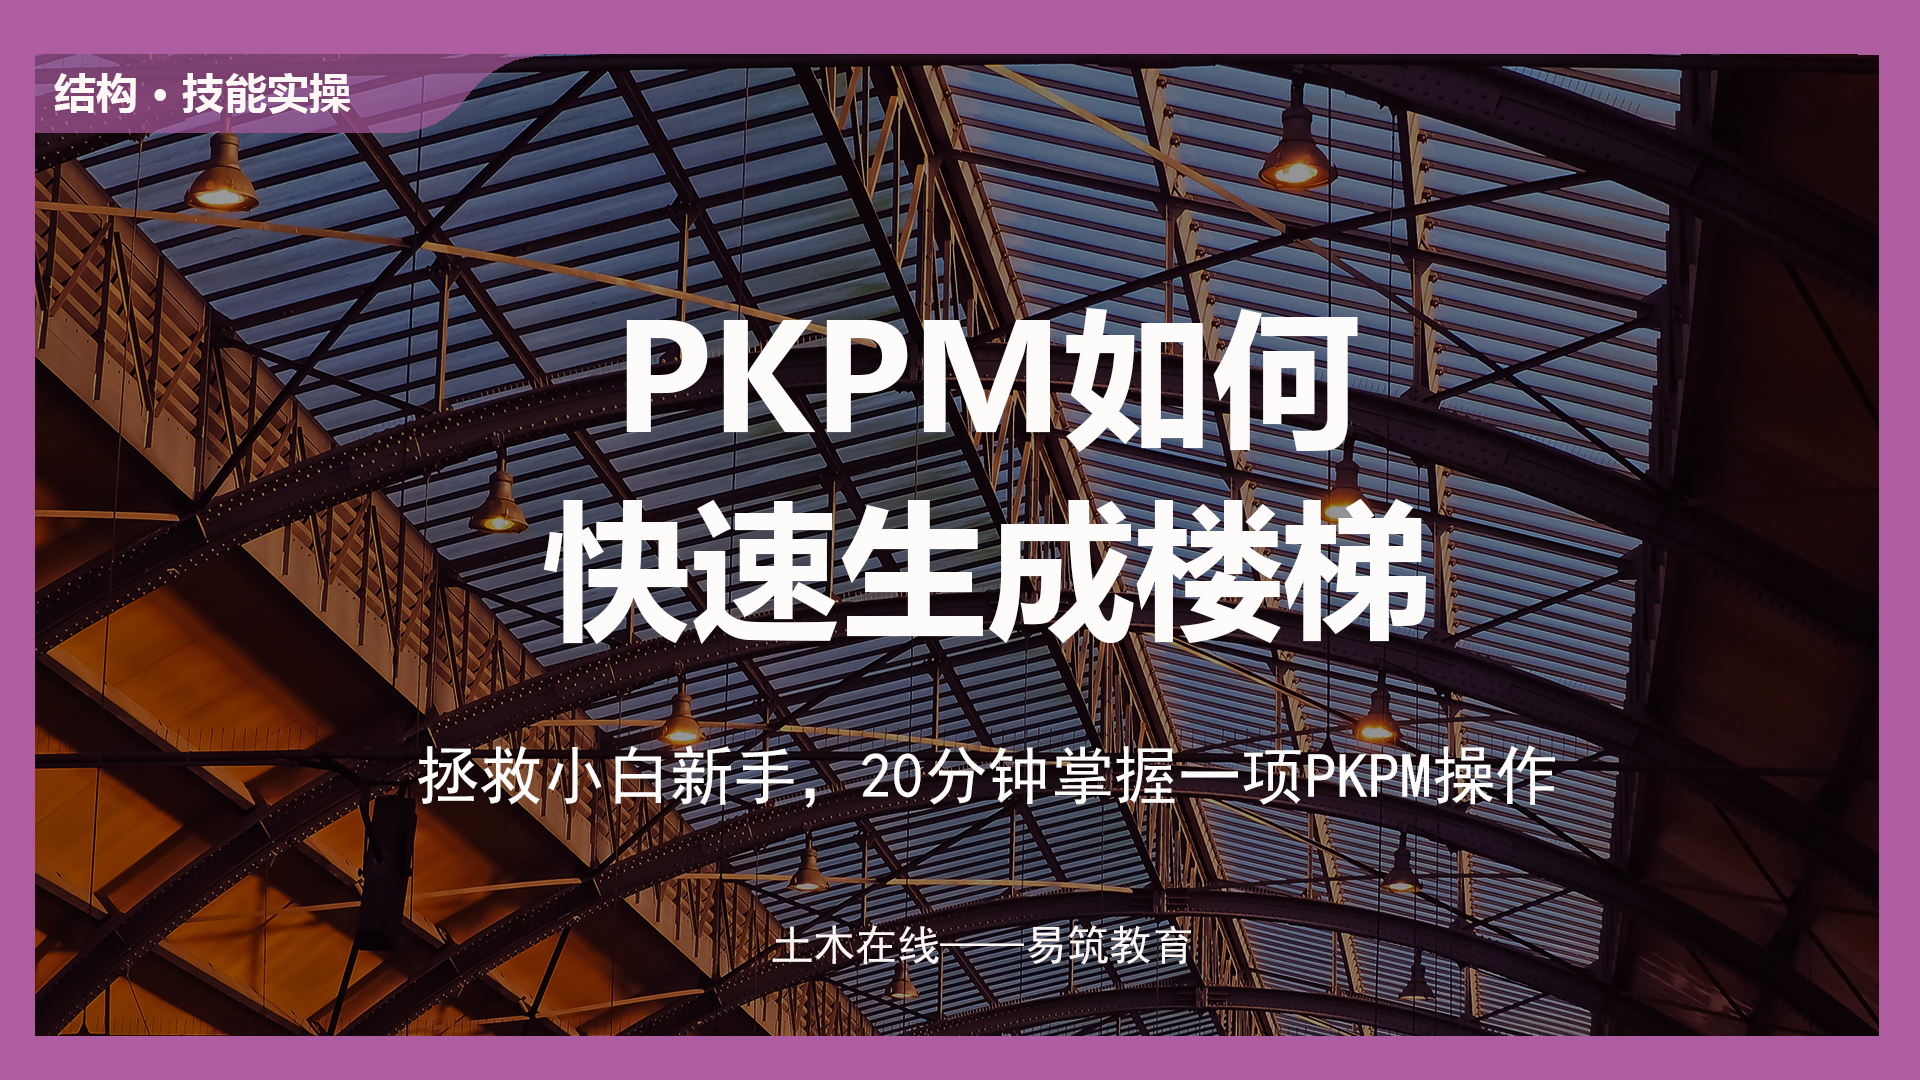 PKPM如何快速生成楼梯